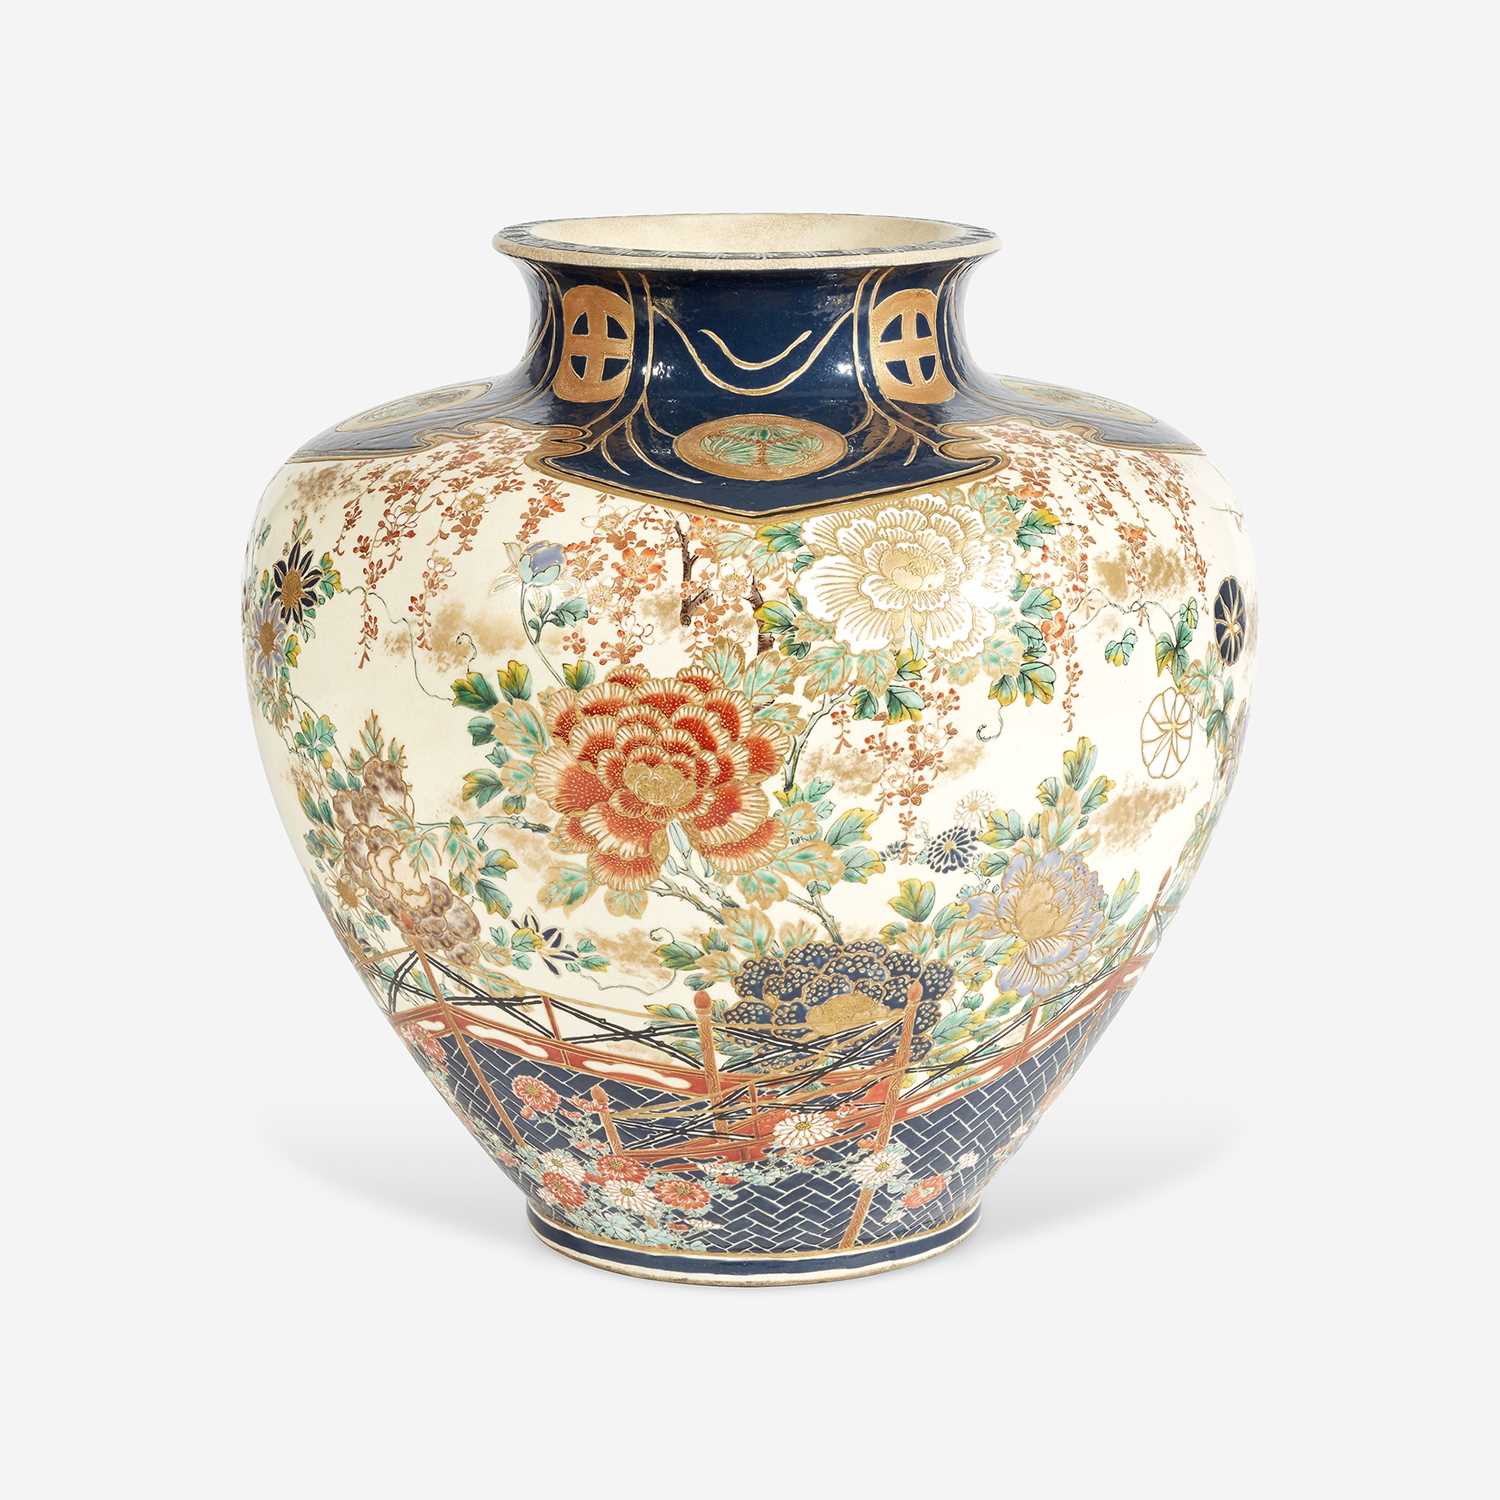 Lot 90 - A Large Satsuma Enamelled Pottery Vase